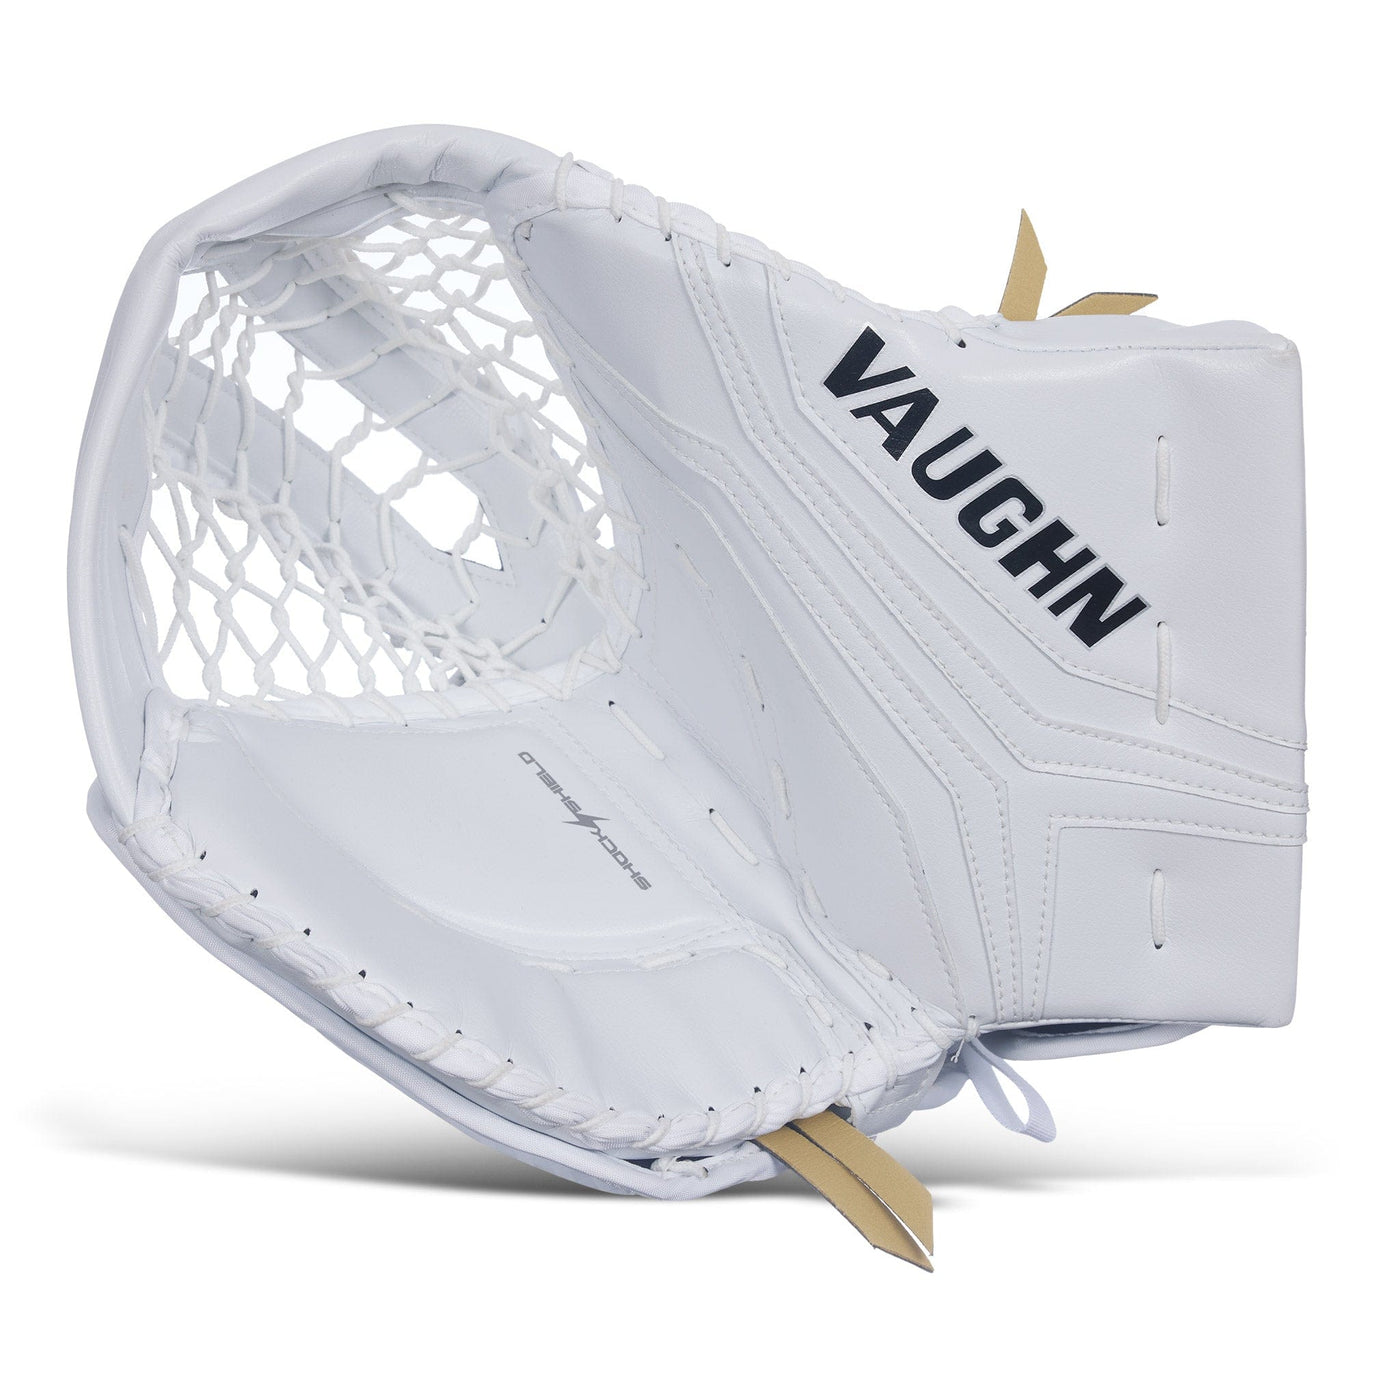 Vaughn Velocity V10 Pro Carbon Senior Goalie Catcher - TheHockeyShop.com